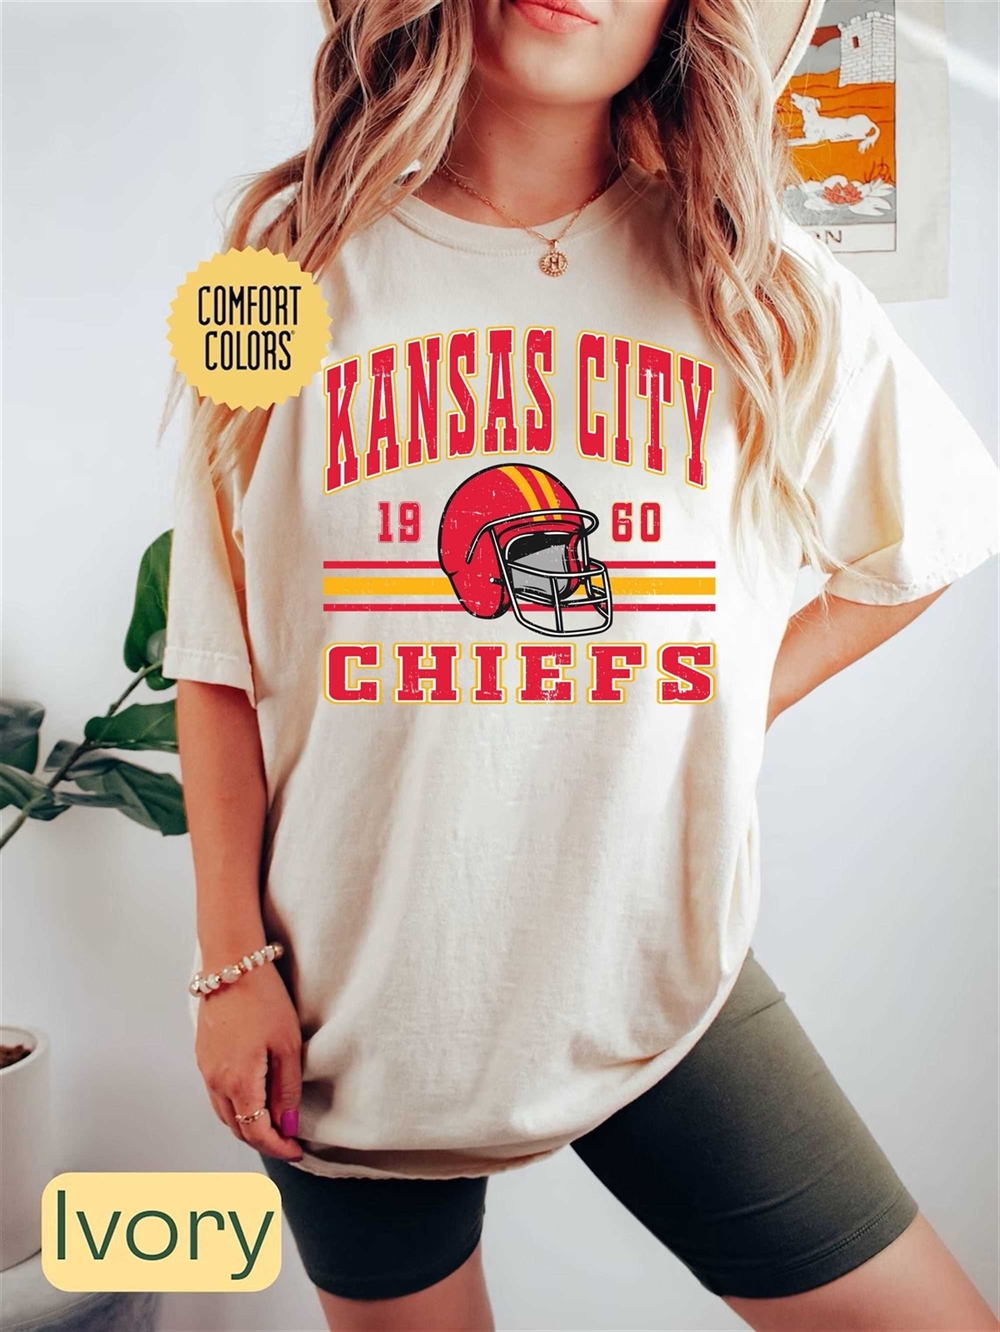 Kansas City Football Comfort Colors Shirt Trendy Vintage Retro 80s Style Football Tshirt